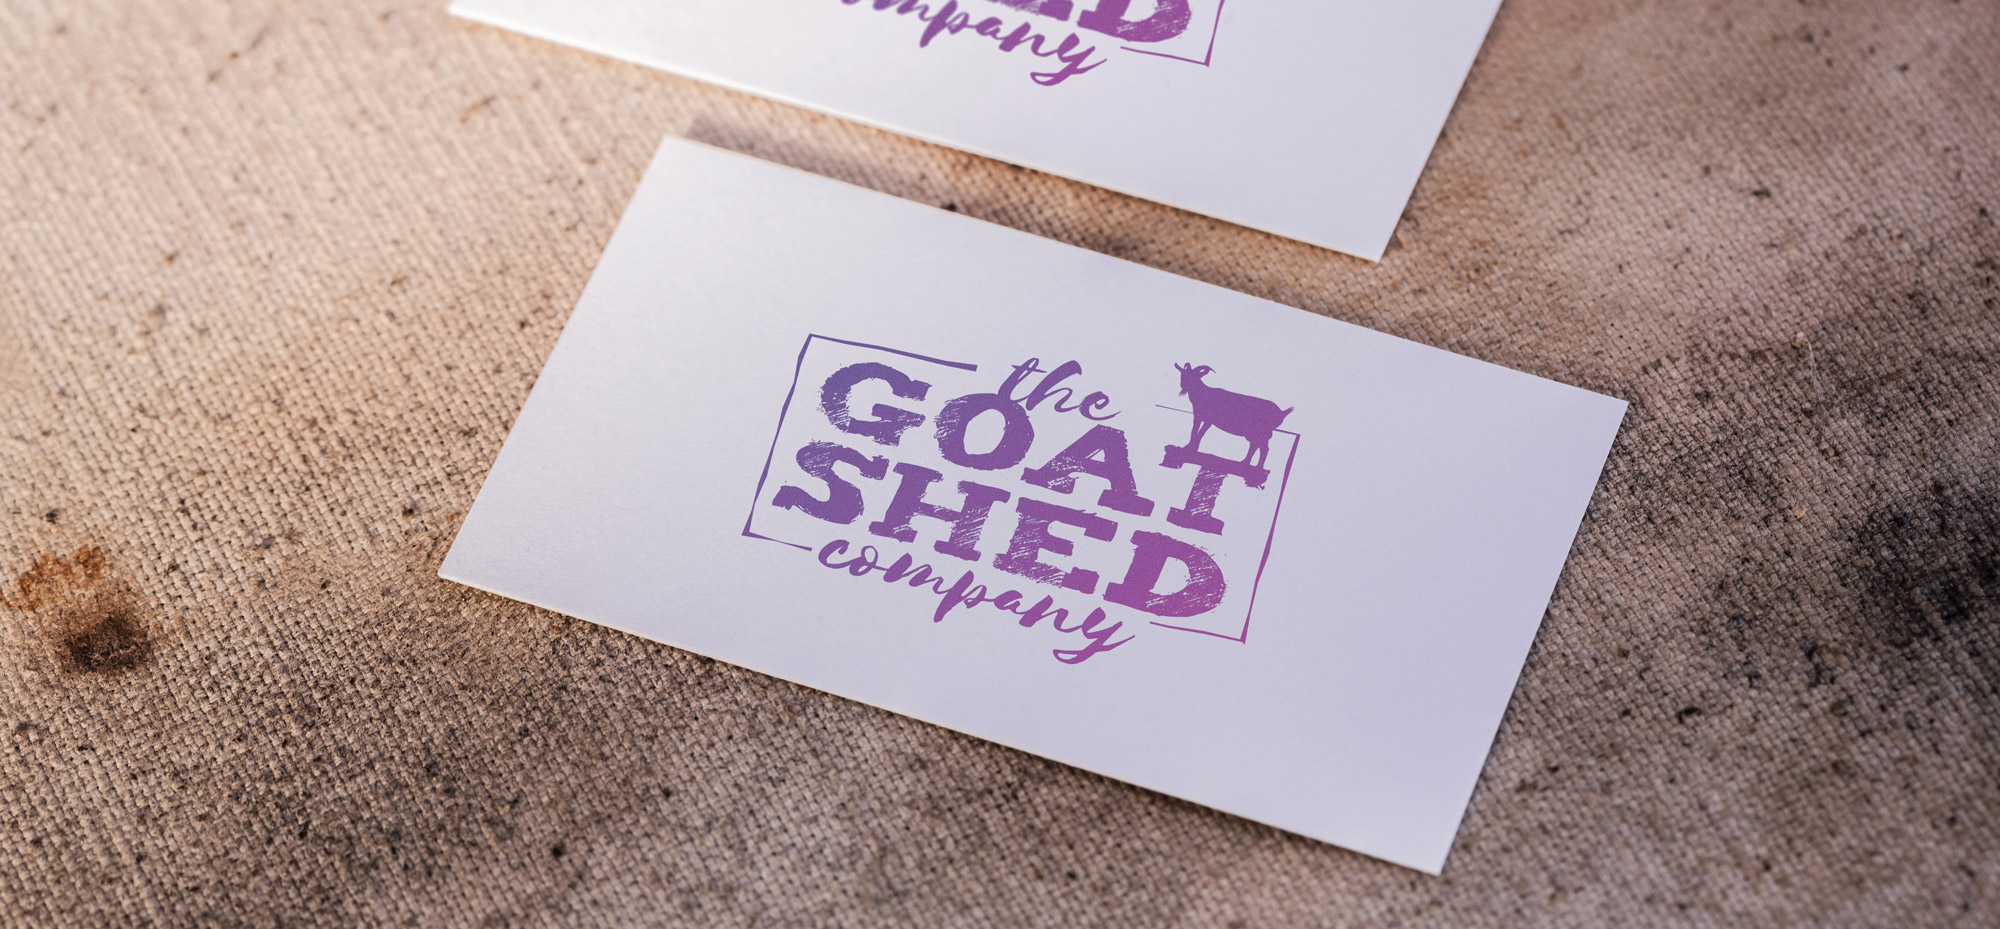 The Goat Shed Company Bespoke Logo Design